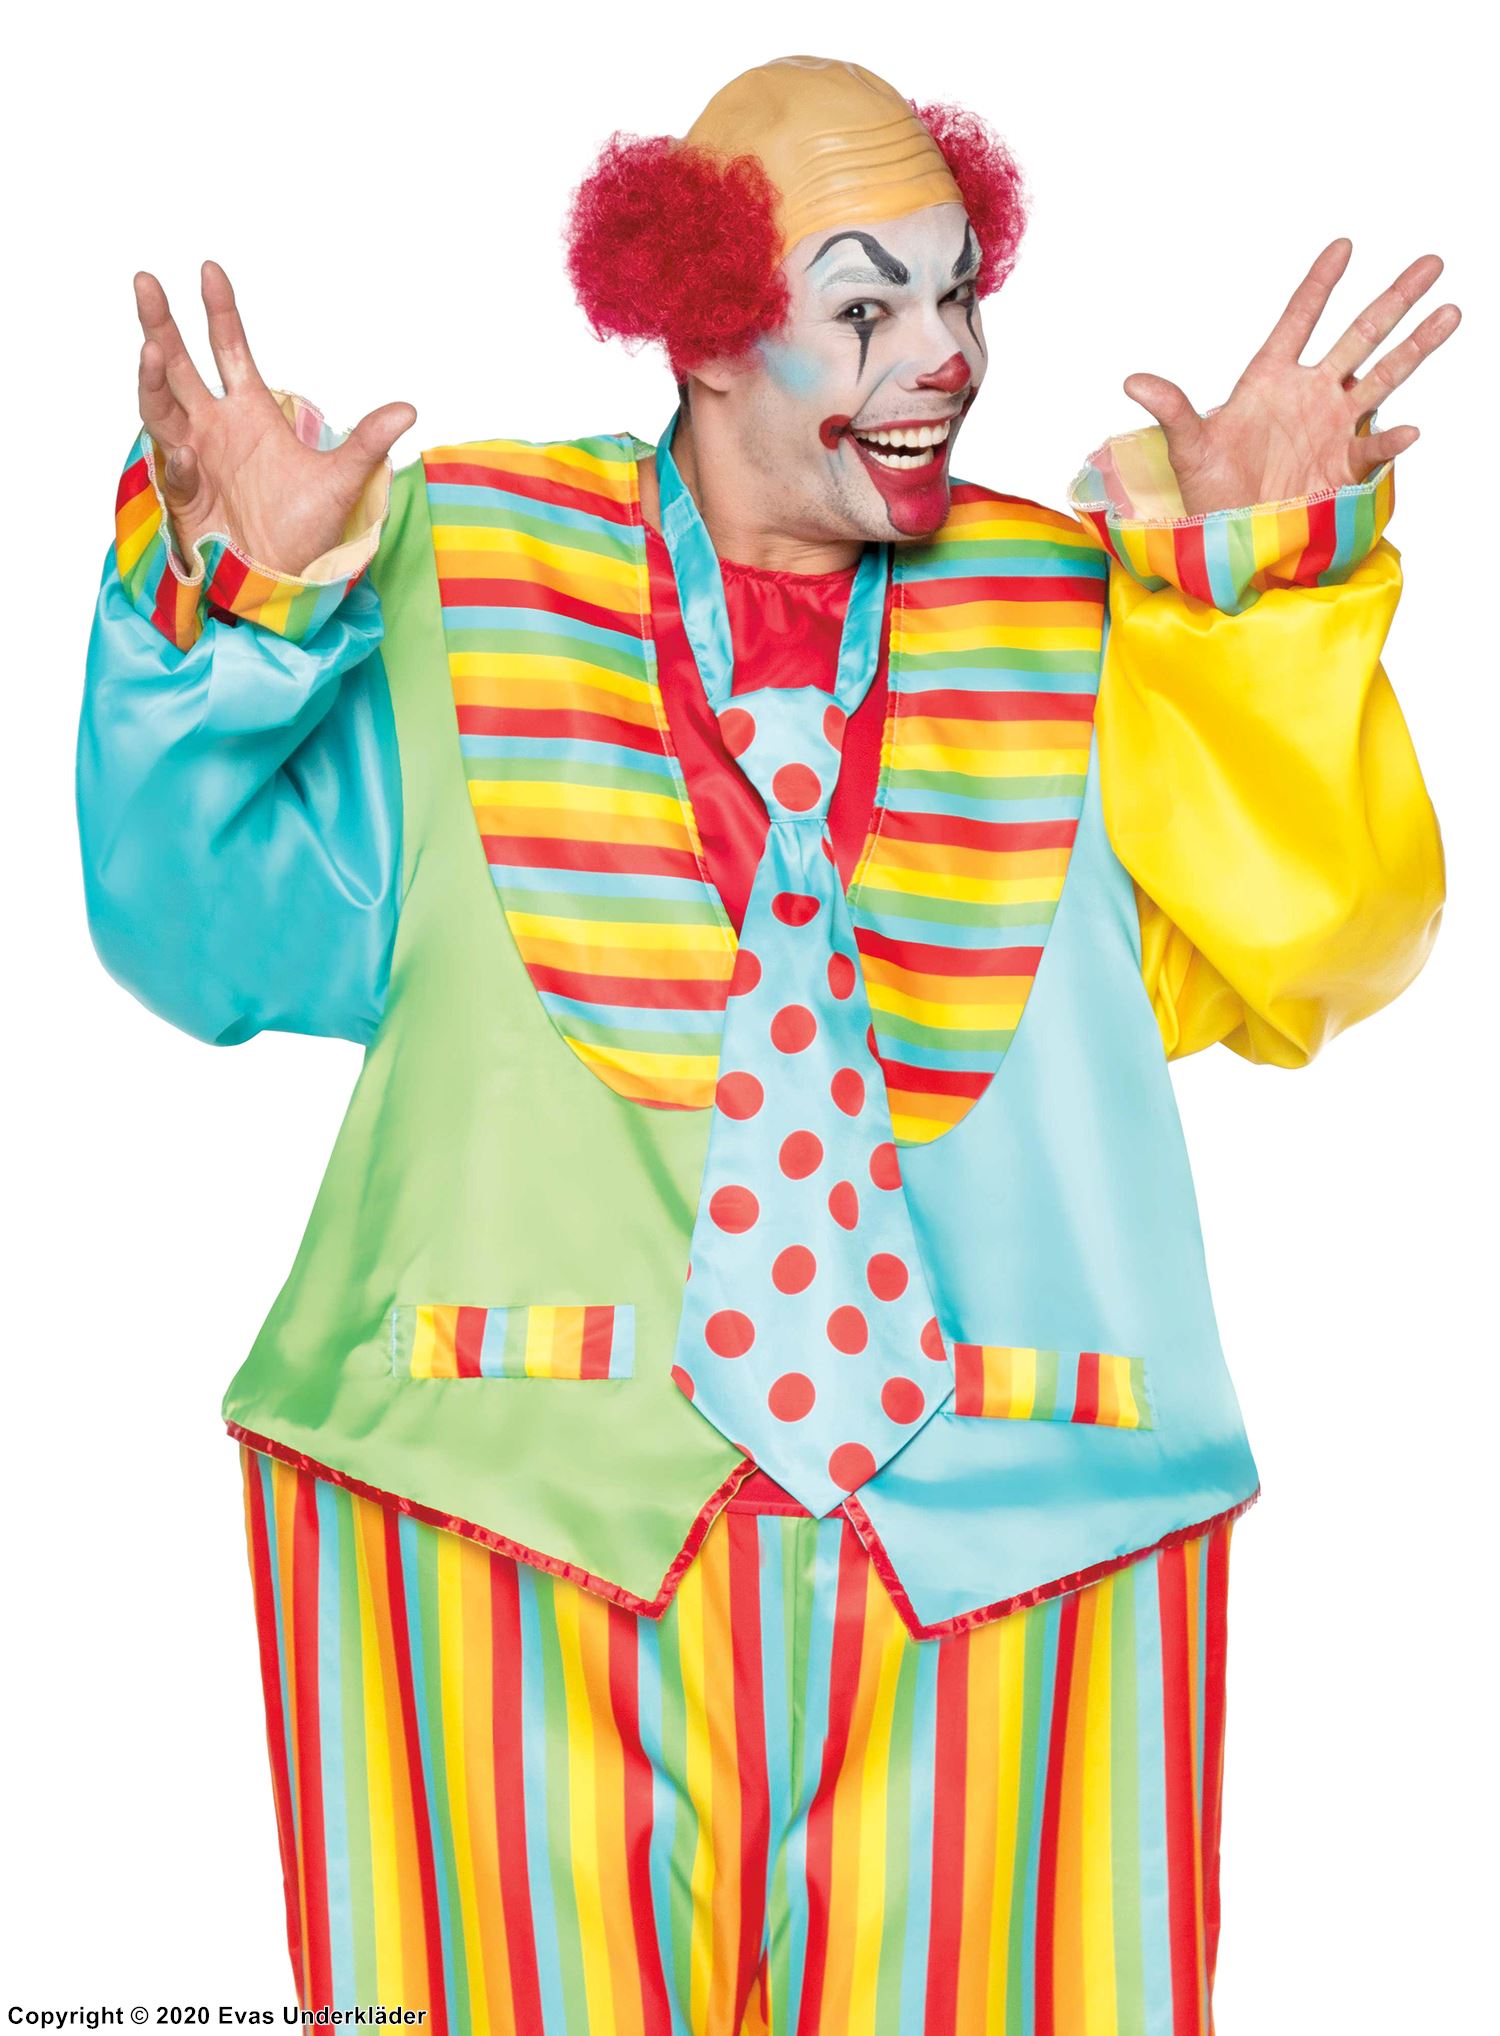 Circus clown, jumpsuit costume, tie, colorful stripes